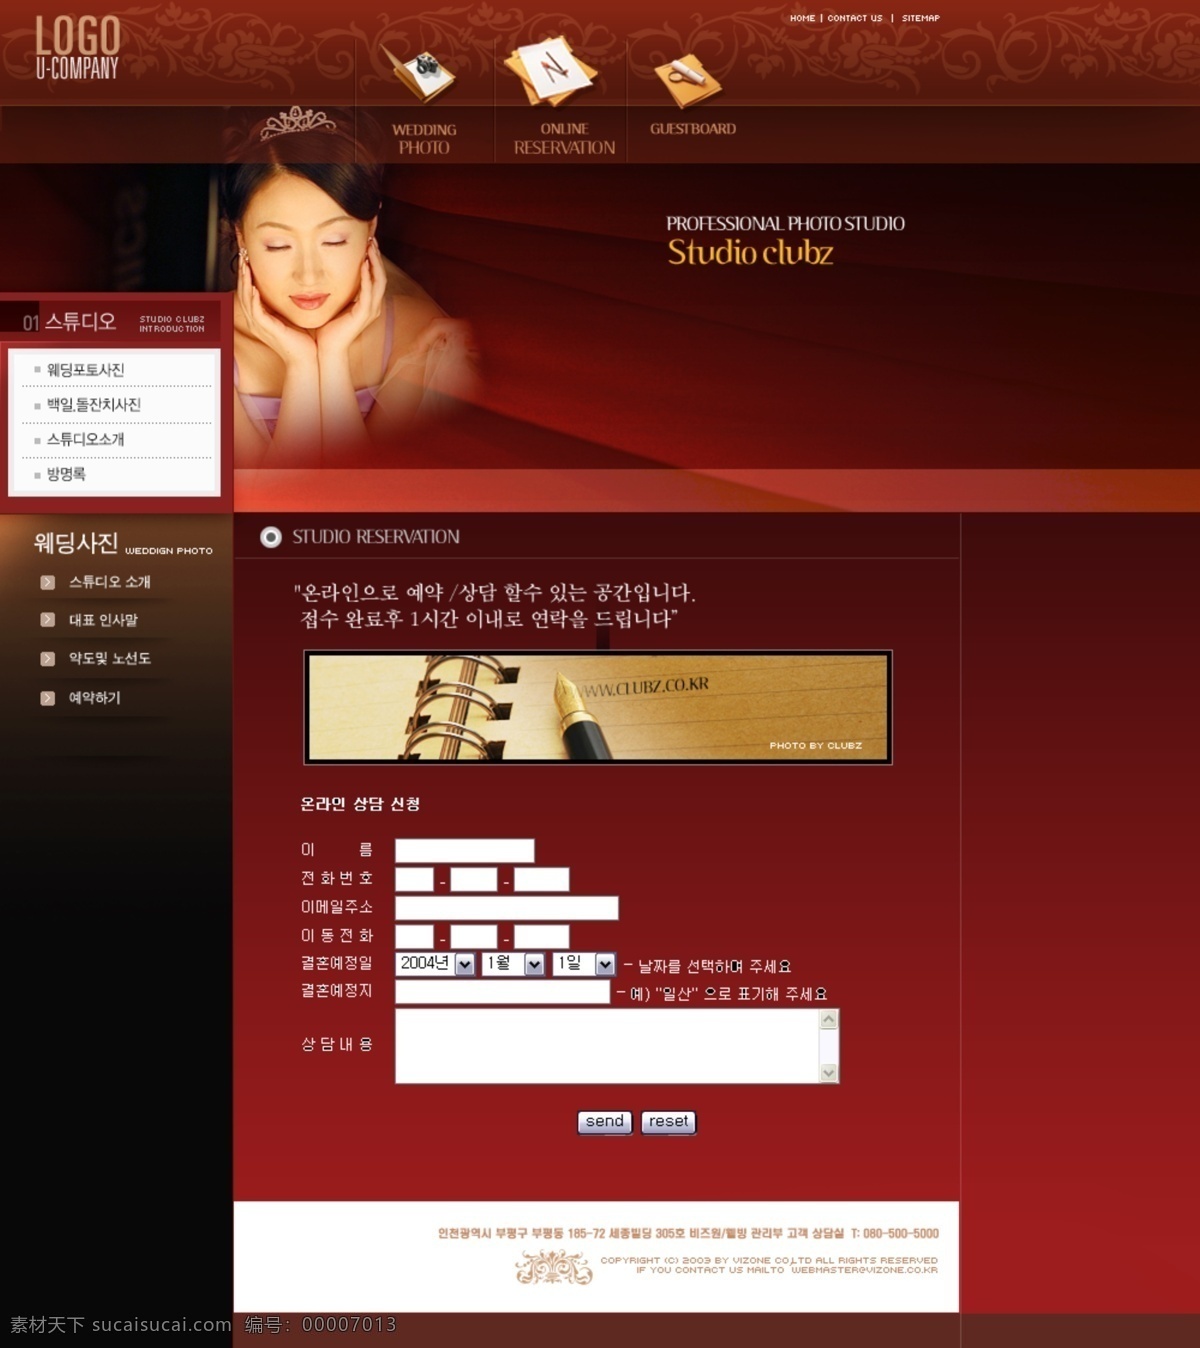 flash 网站 模板 个人网站模板 韩国网站模板 免费网站模板 企业网站模板 商业网站模板 网页模板 网站模板下载 网站设计模板 网页素材